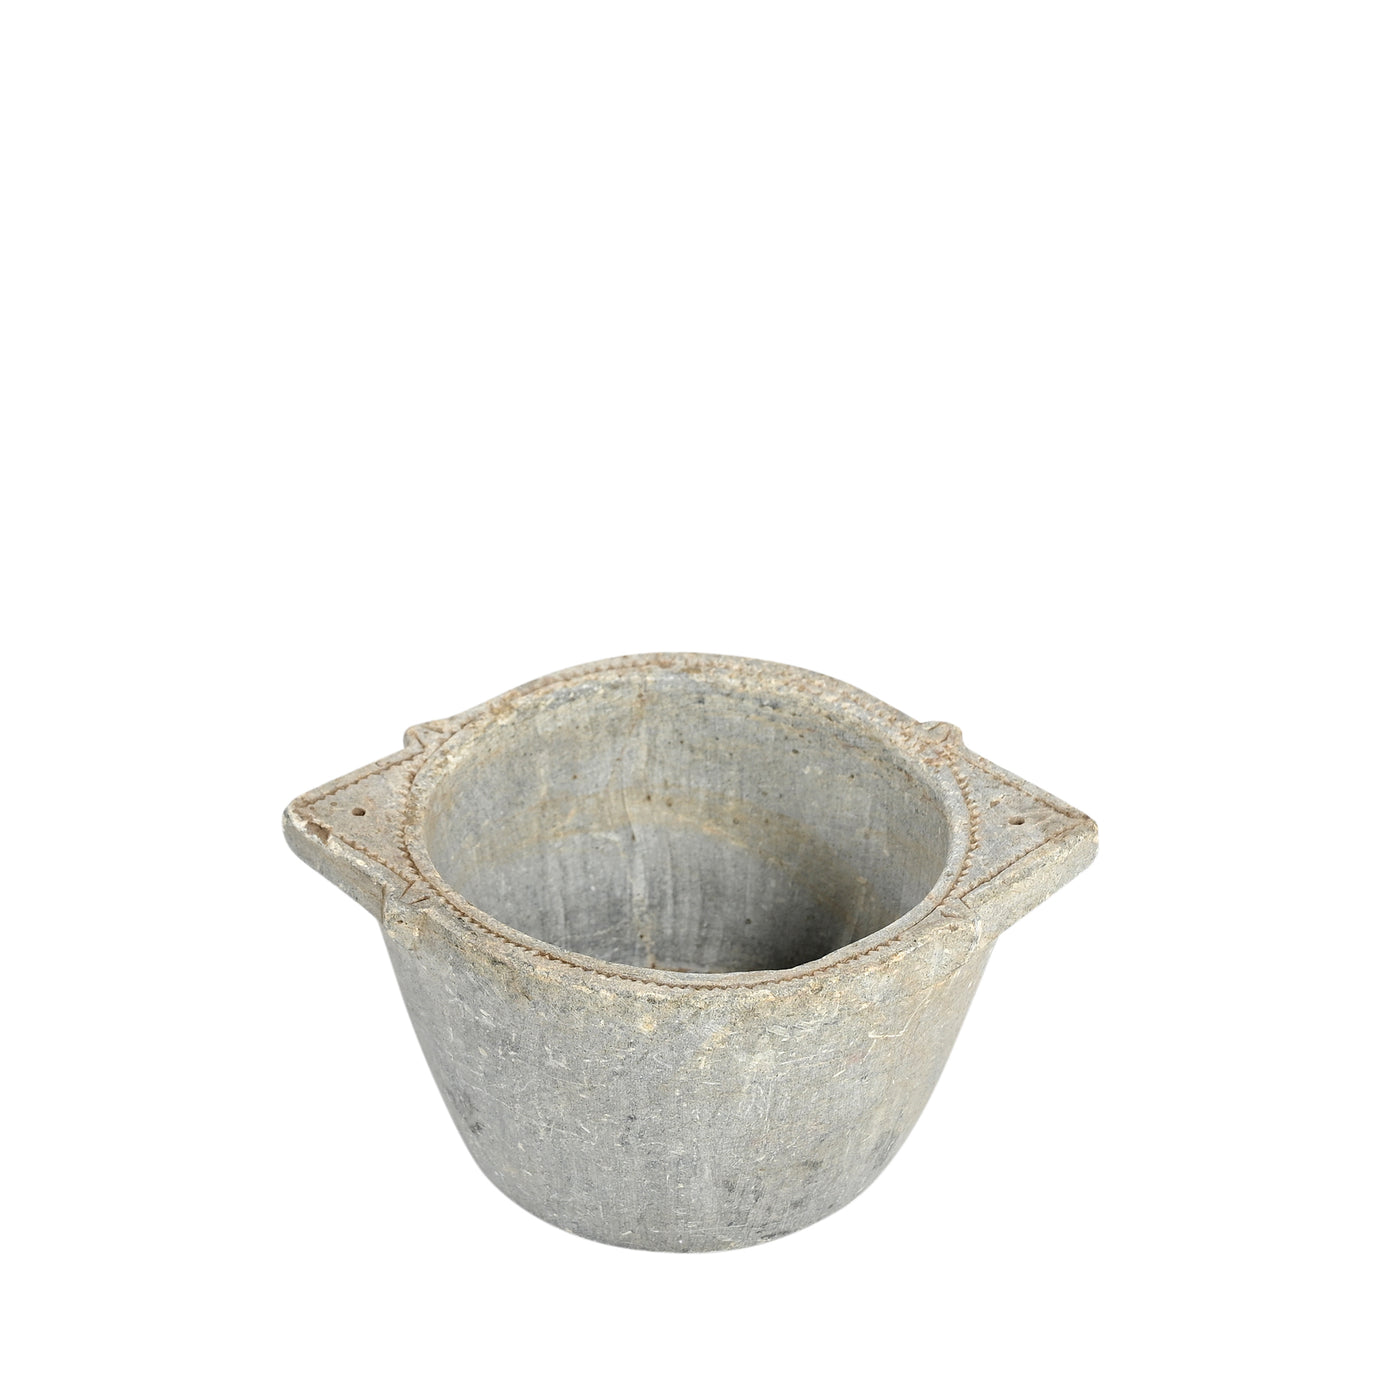 Kovaya - Stone bowl n ° 1